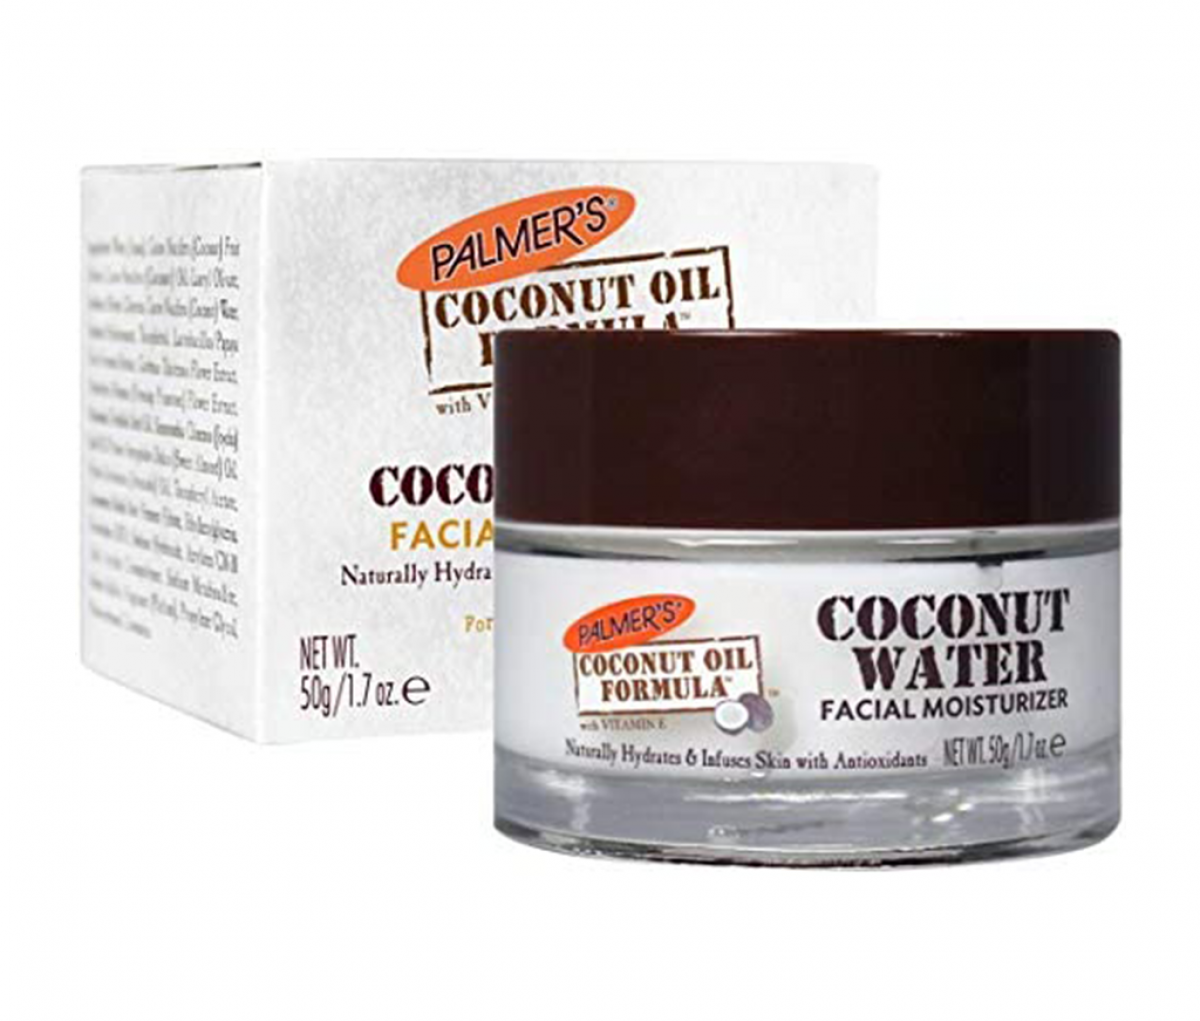 Palmers Coconut Oil Formula Facial Moisturiser 